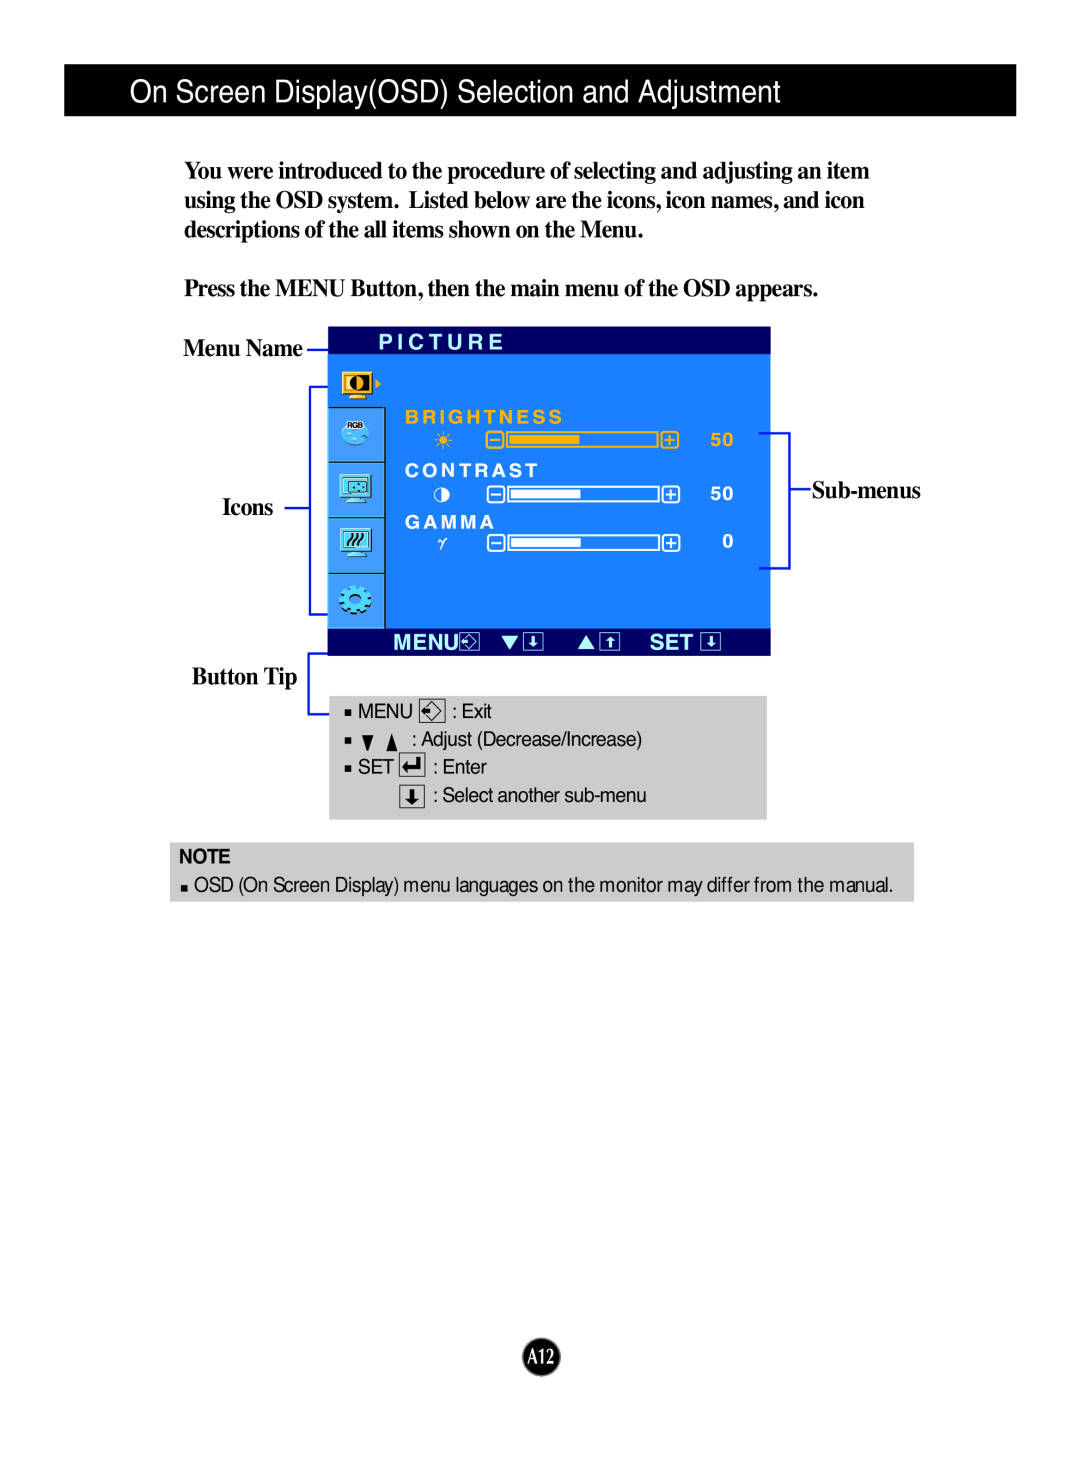 LG Electronics L1953TR Menu Name Icons Button Tip, Sub-menus, On Screen DisplayOSD Selection and Adjustment, P I C T U R E 